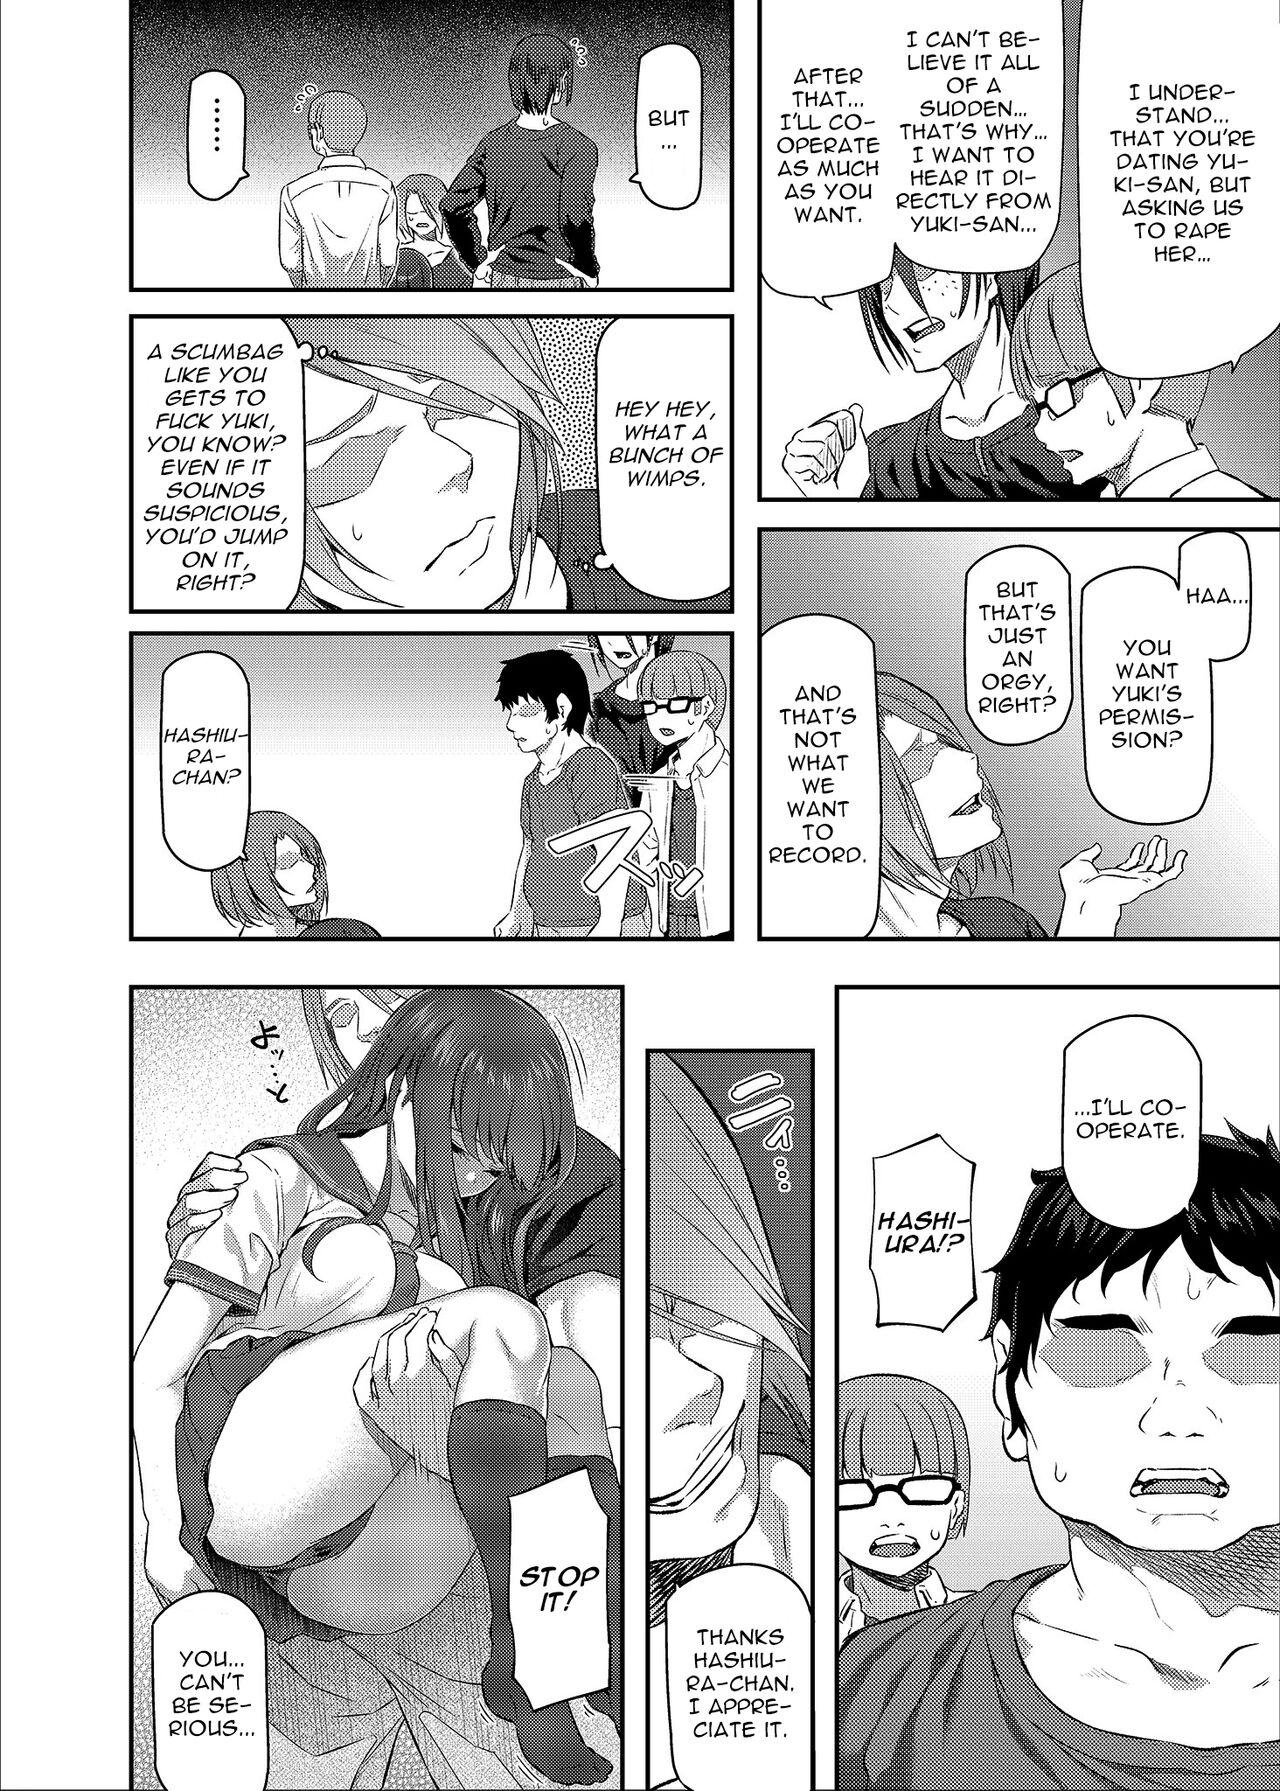 Bare Suika San - Original Ex Girlfriend - Page 7